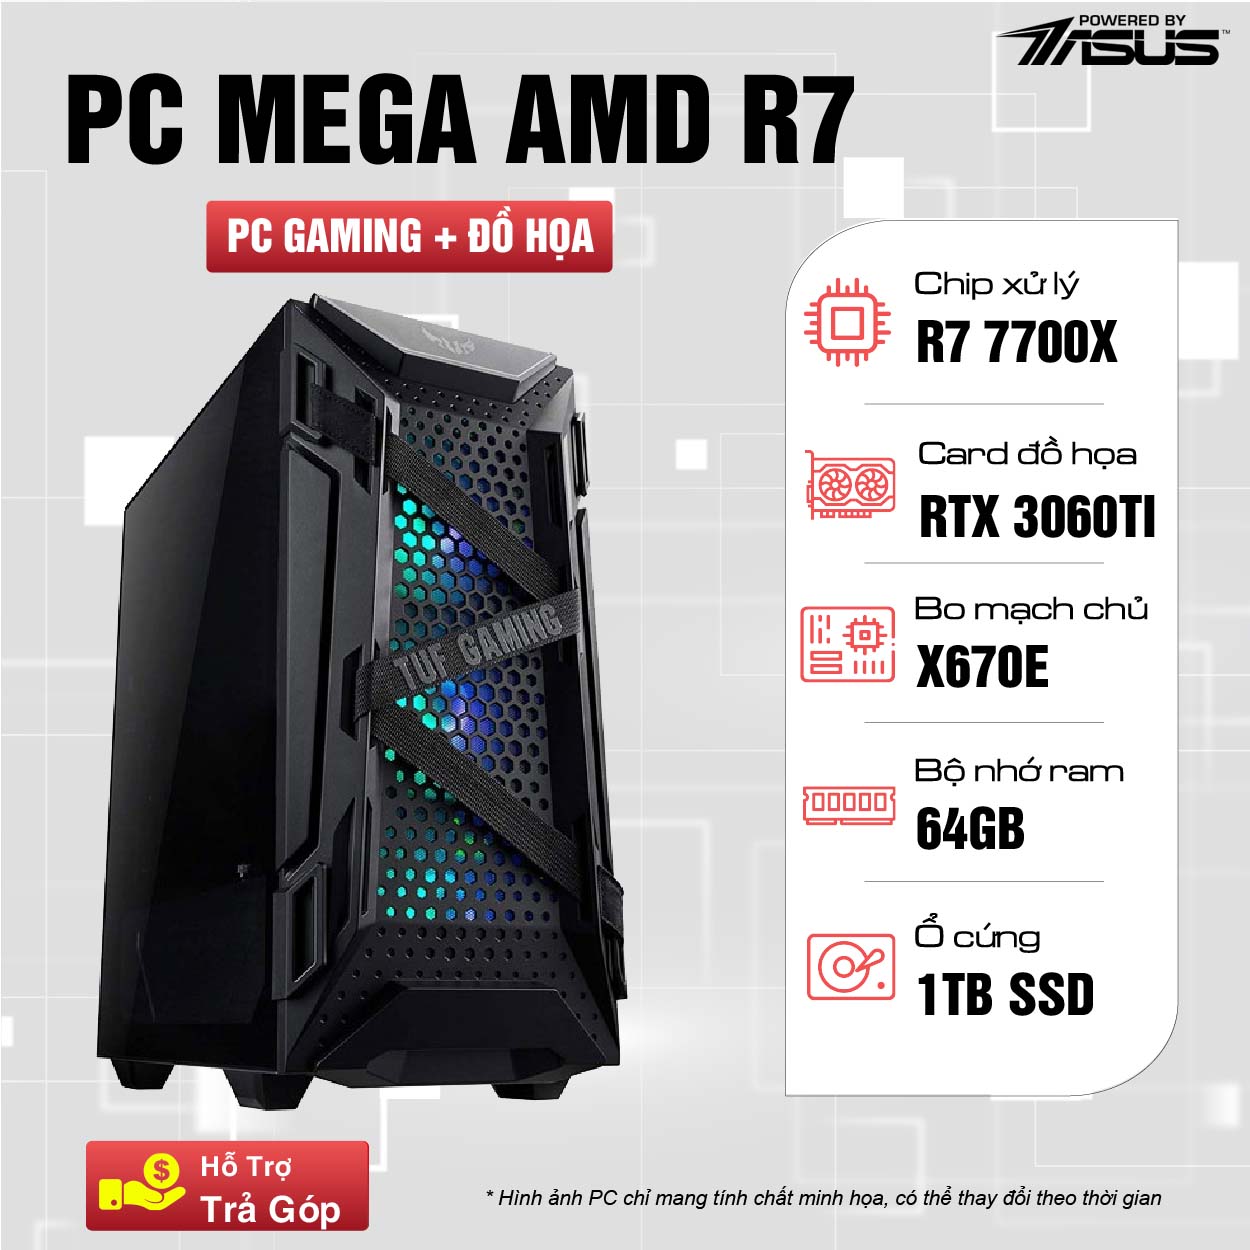 PC MEGA AMD R7 7700X